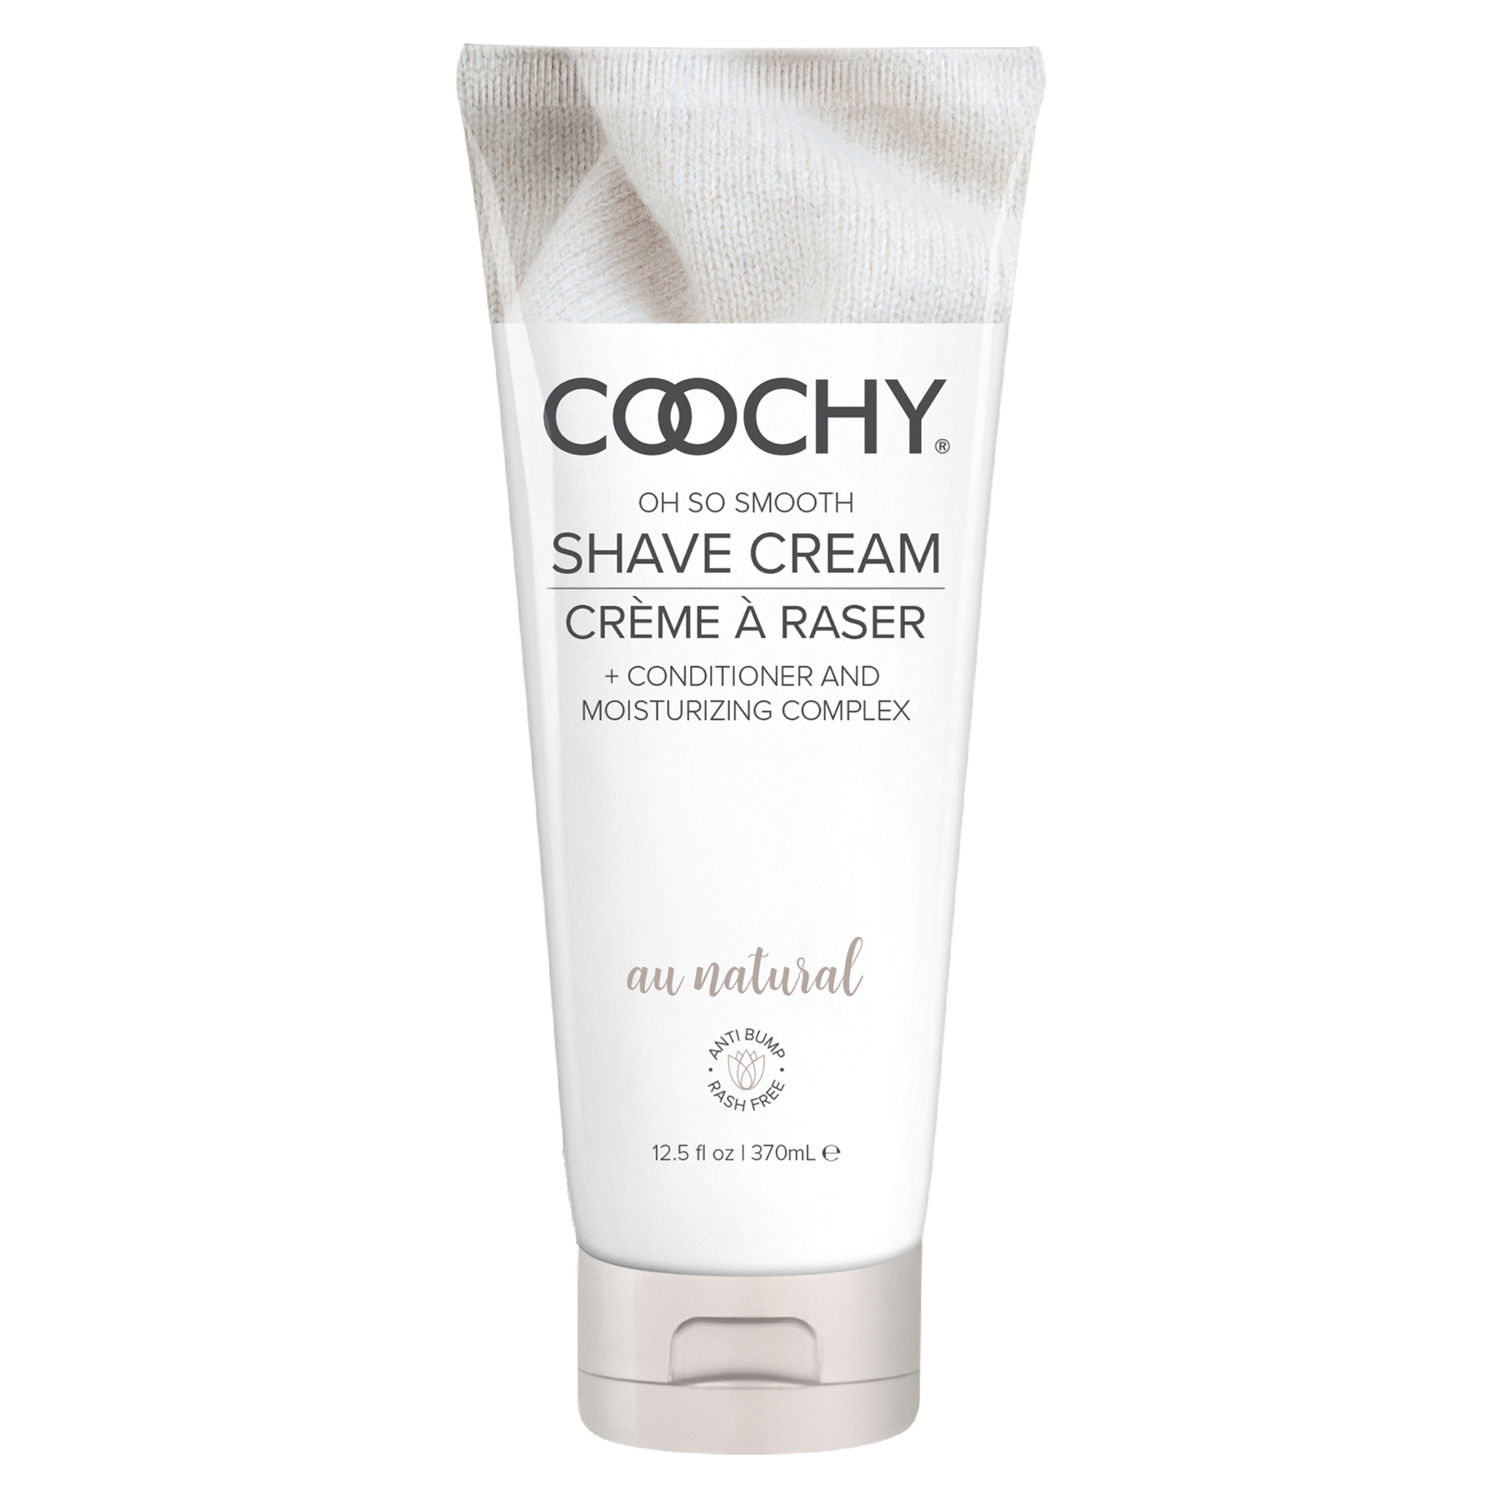 Coochy Shave Cream